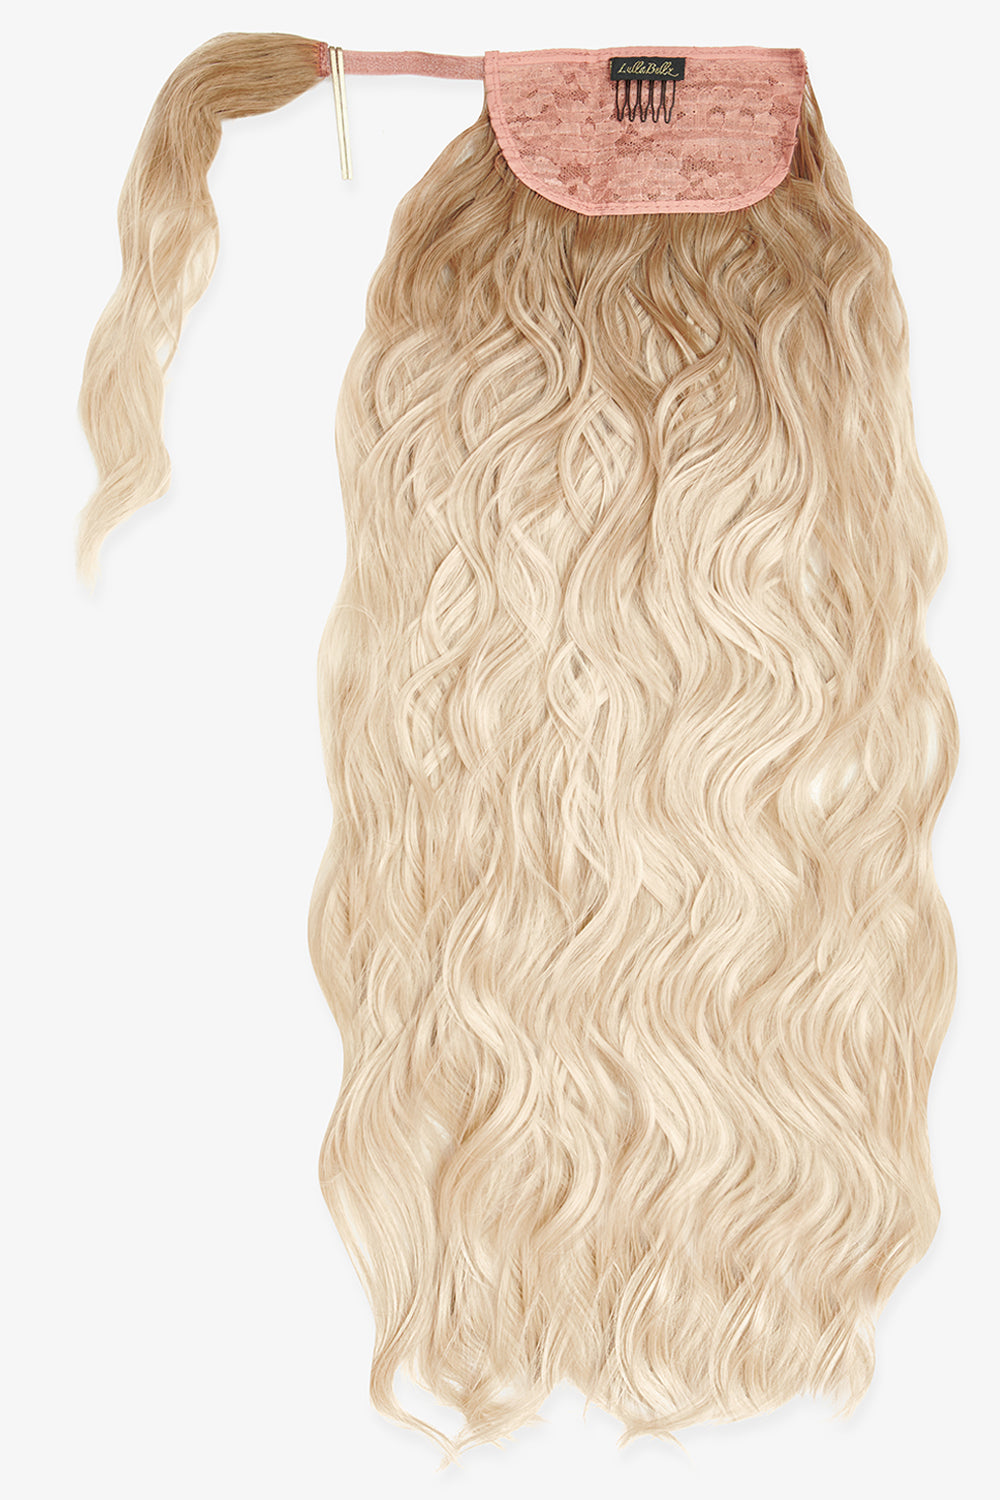 26" Textured Wavy Grande Lengths Wraparound Ponytail - LullaBellz  - Rooted Light Blonde